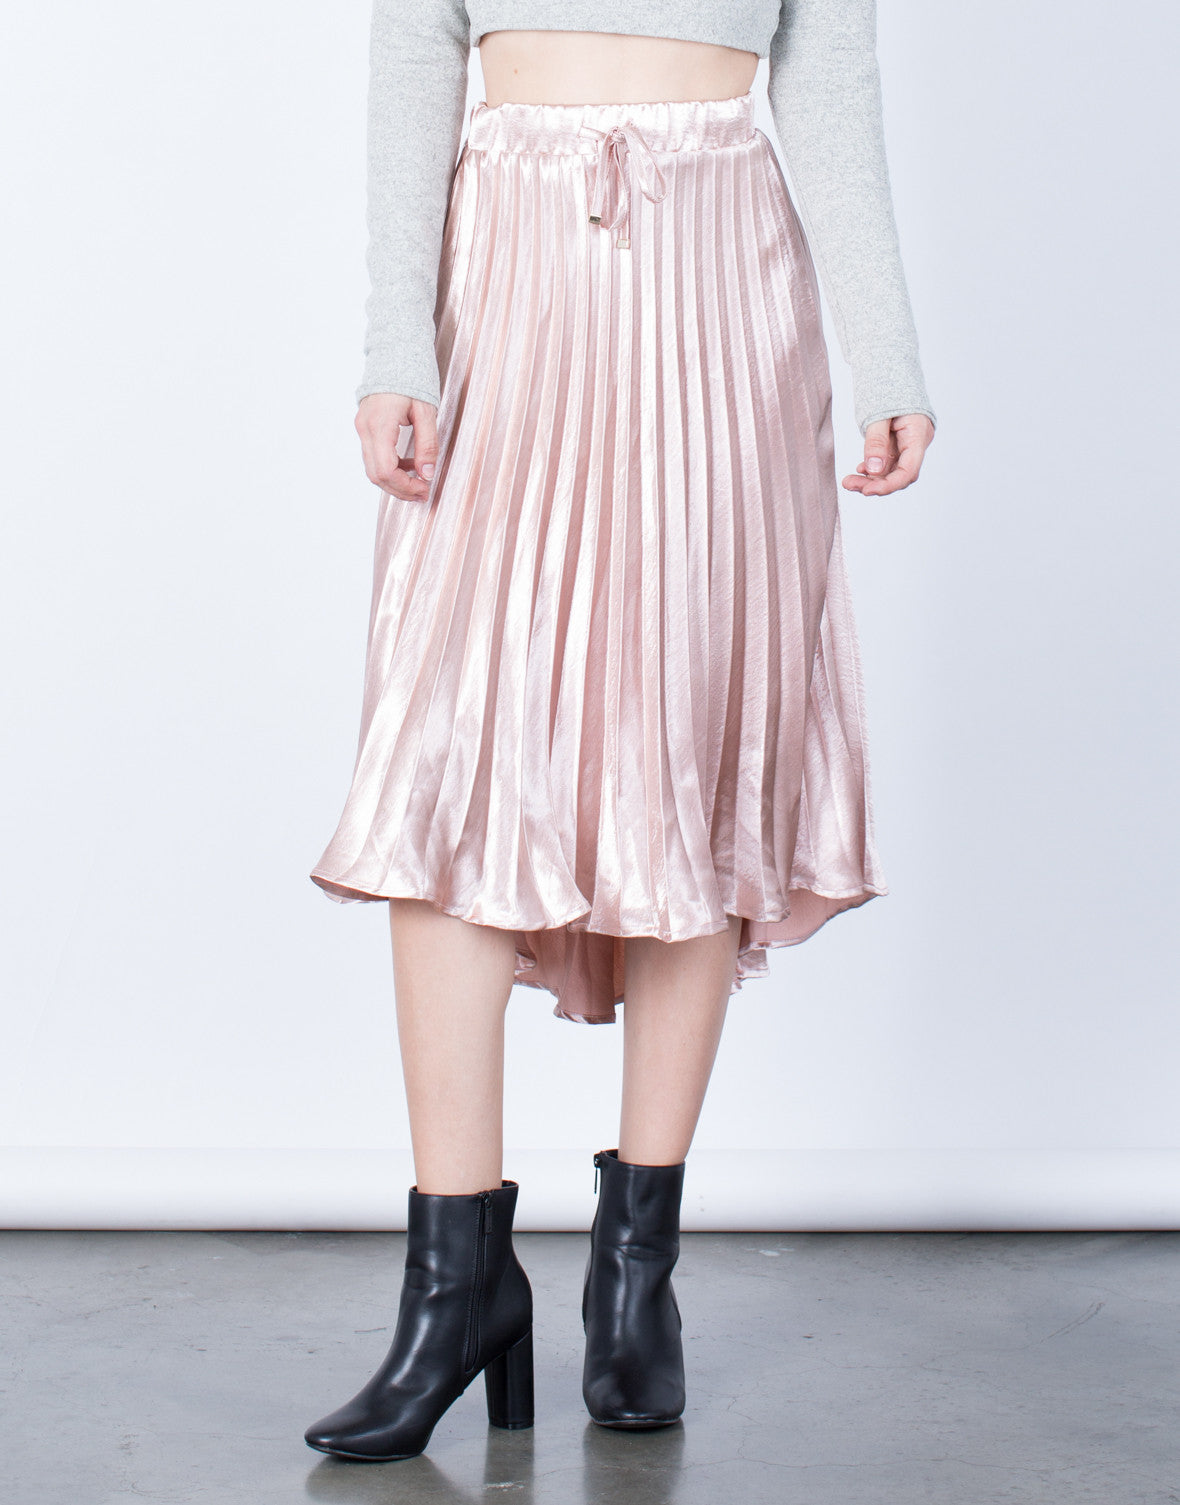 Pleated Metallic Skirt Light Pink Midi Skirt Pleated Satin Skirt 2020ave 4263